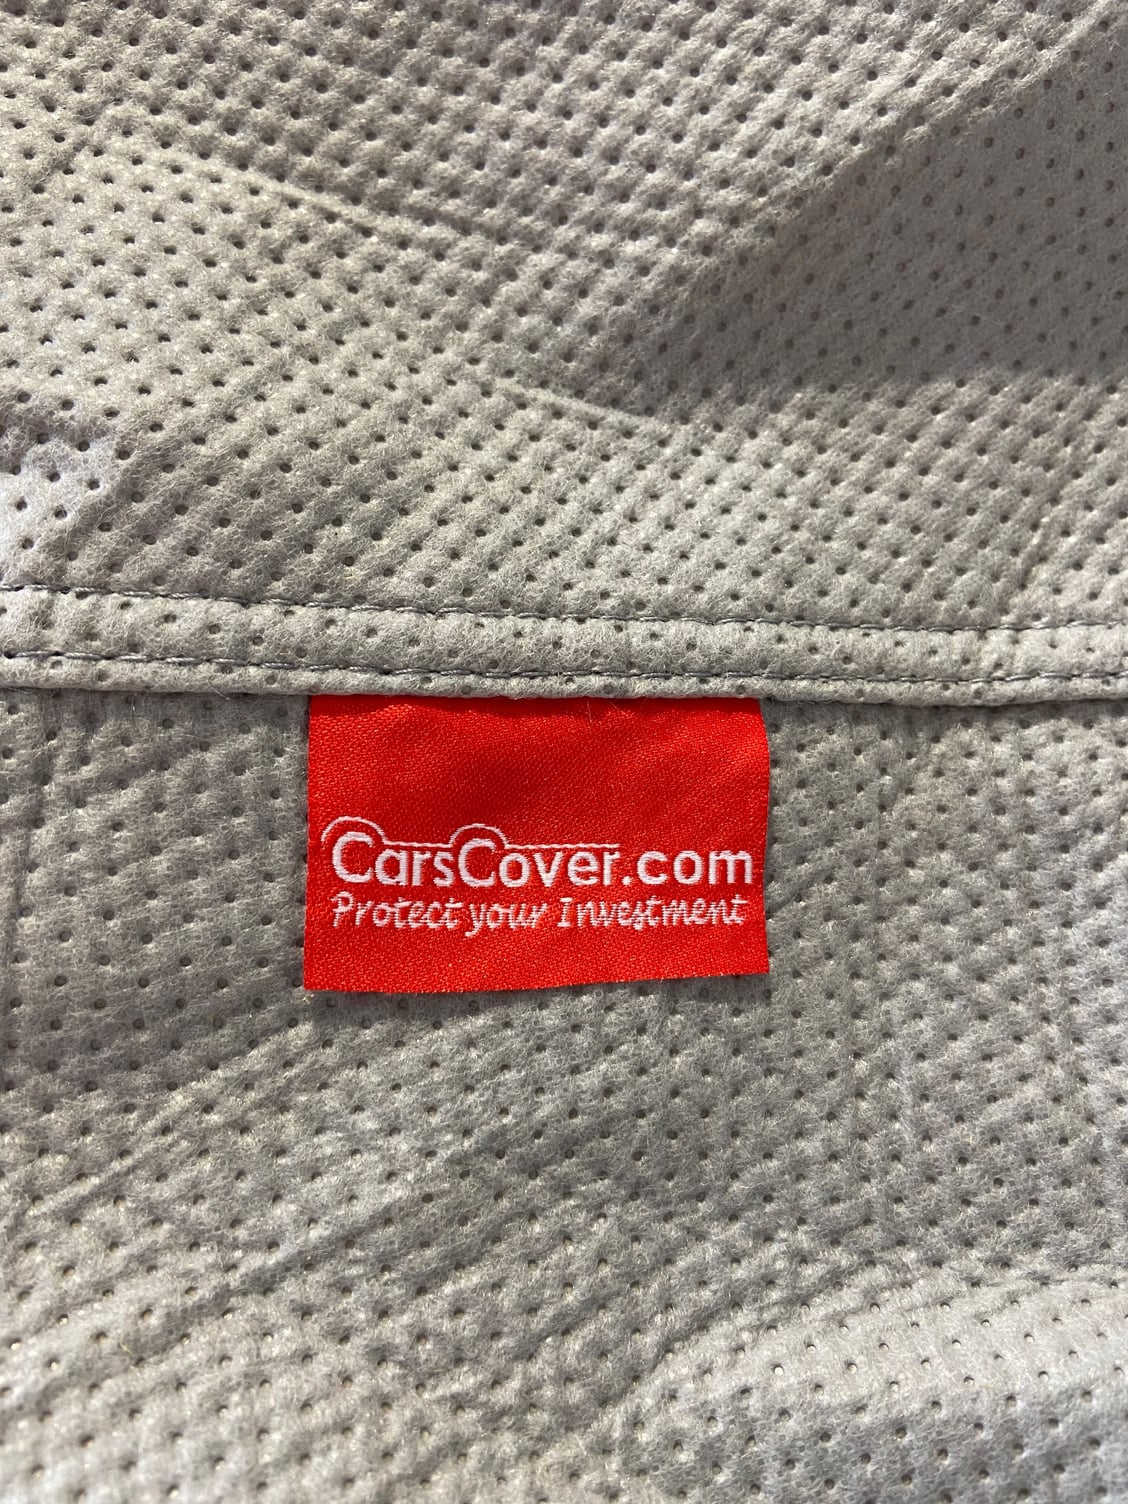 FS (For Sale) Cover for convertible - CorvetteForum - Chevrolet ...